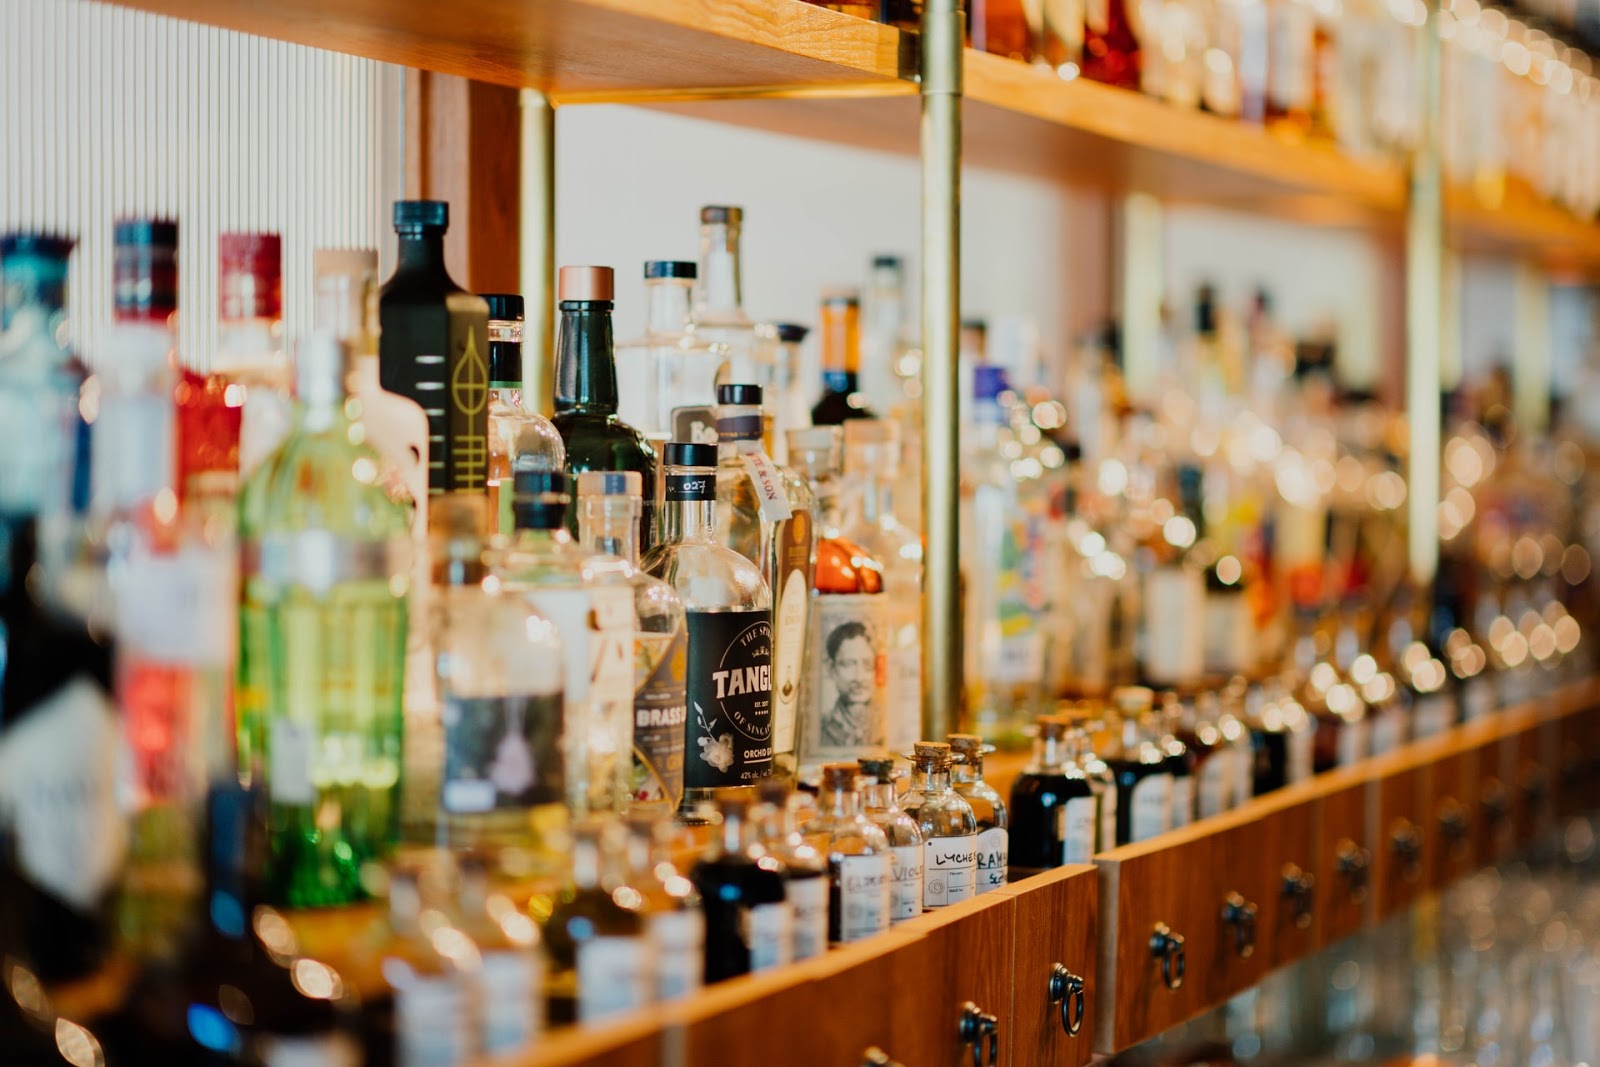 A nice bar lineup representing alcohol.